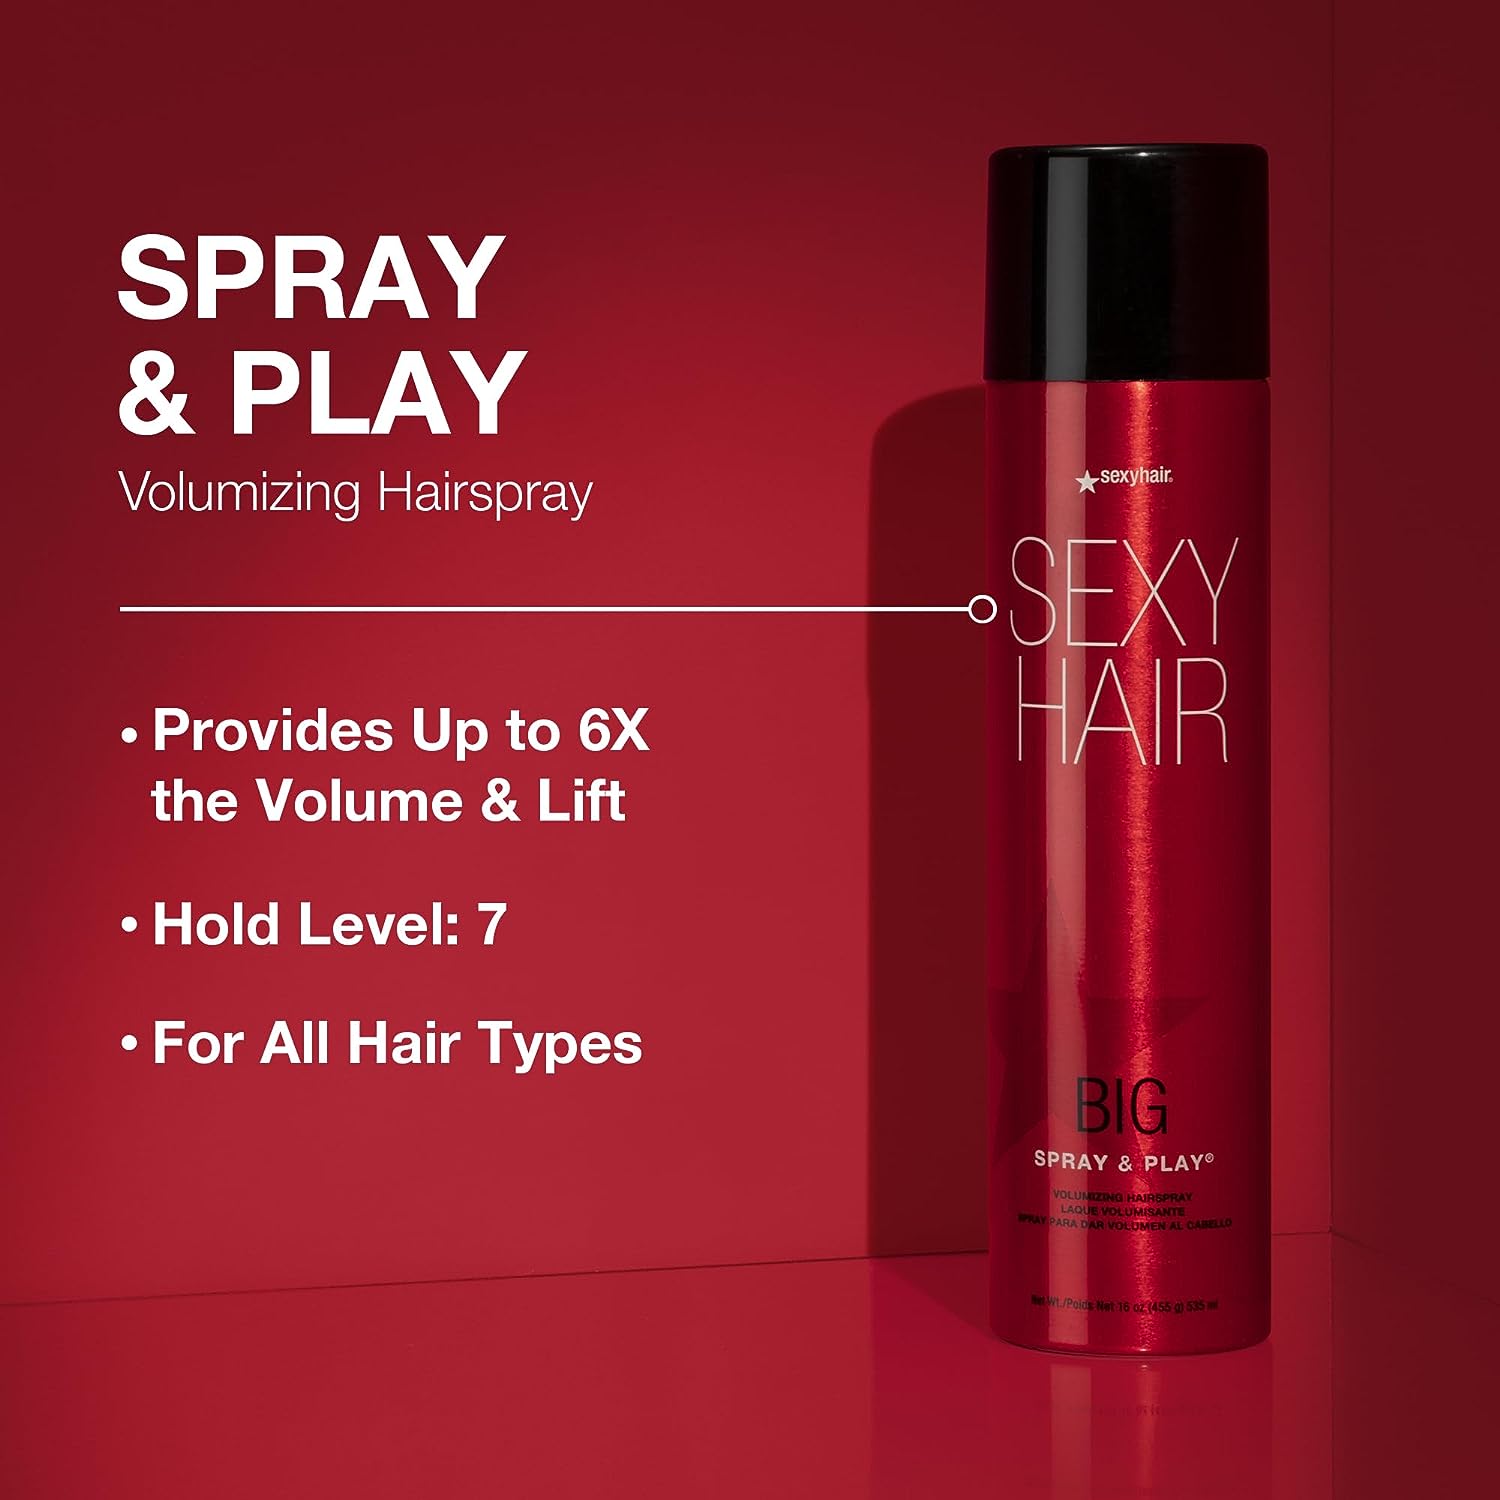 Sexy Hair Big Sexy Hair - Spray and Play Hairspray - Reviews